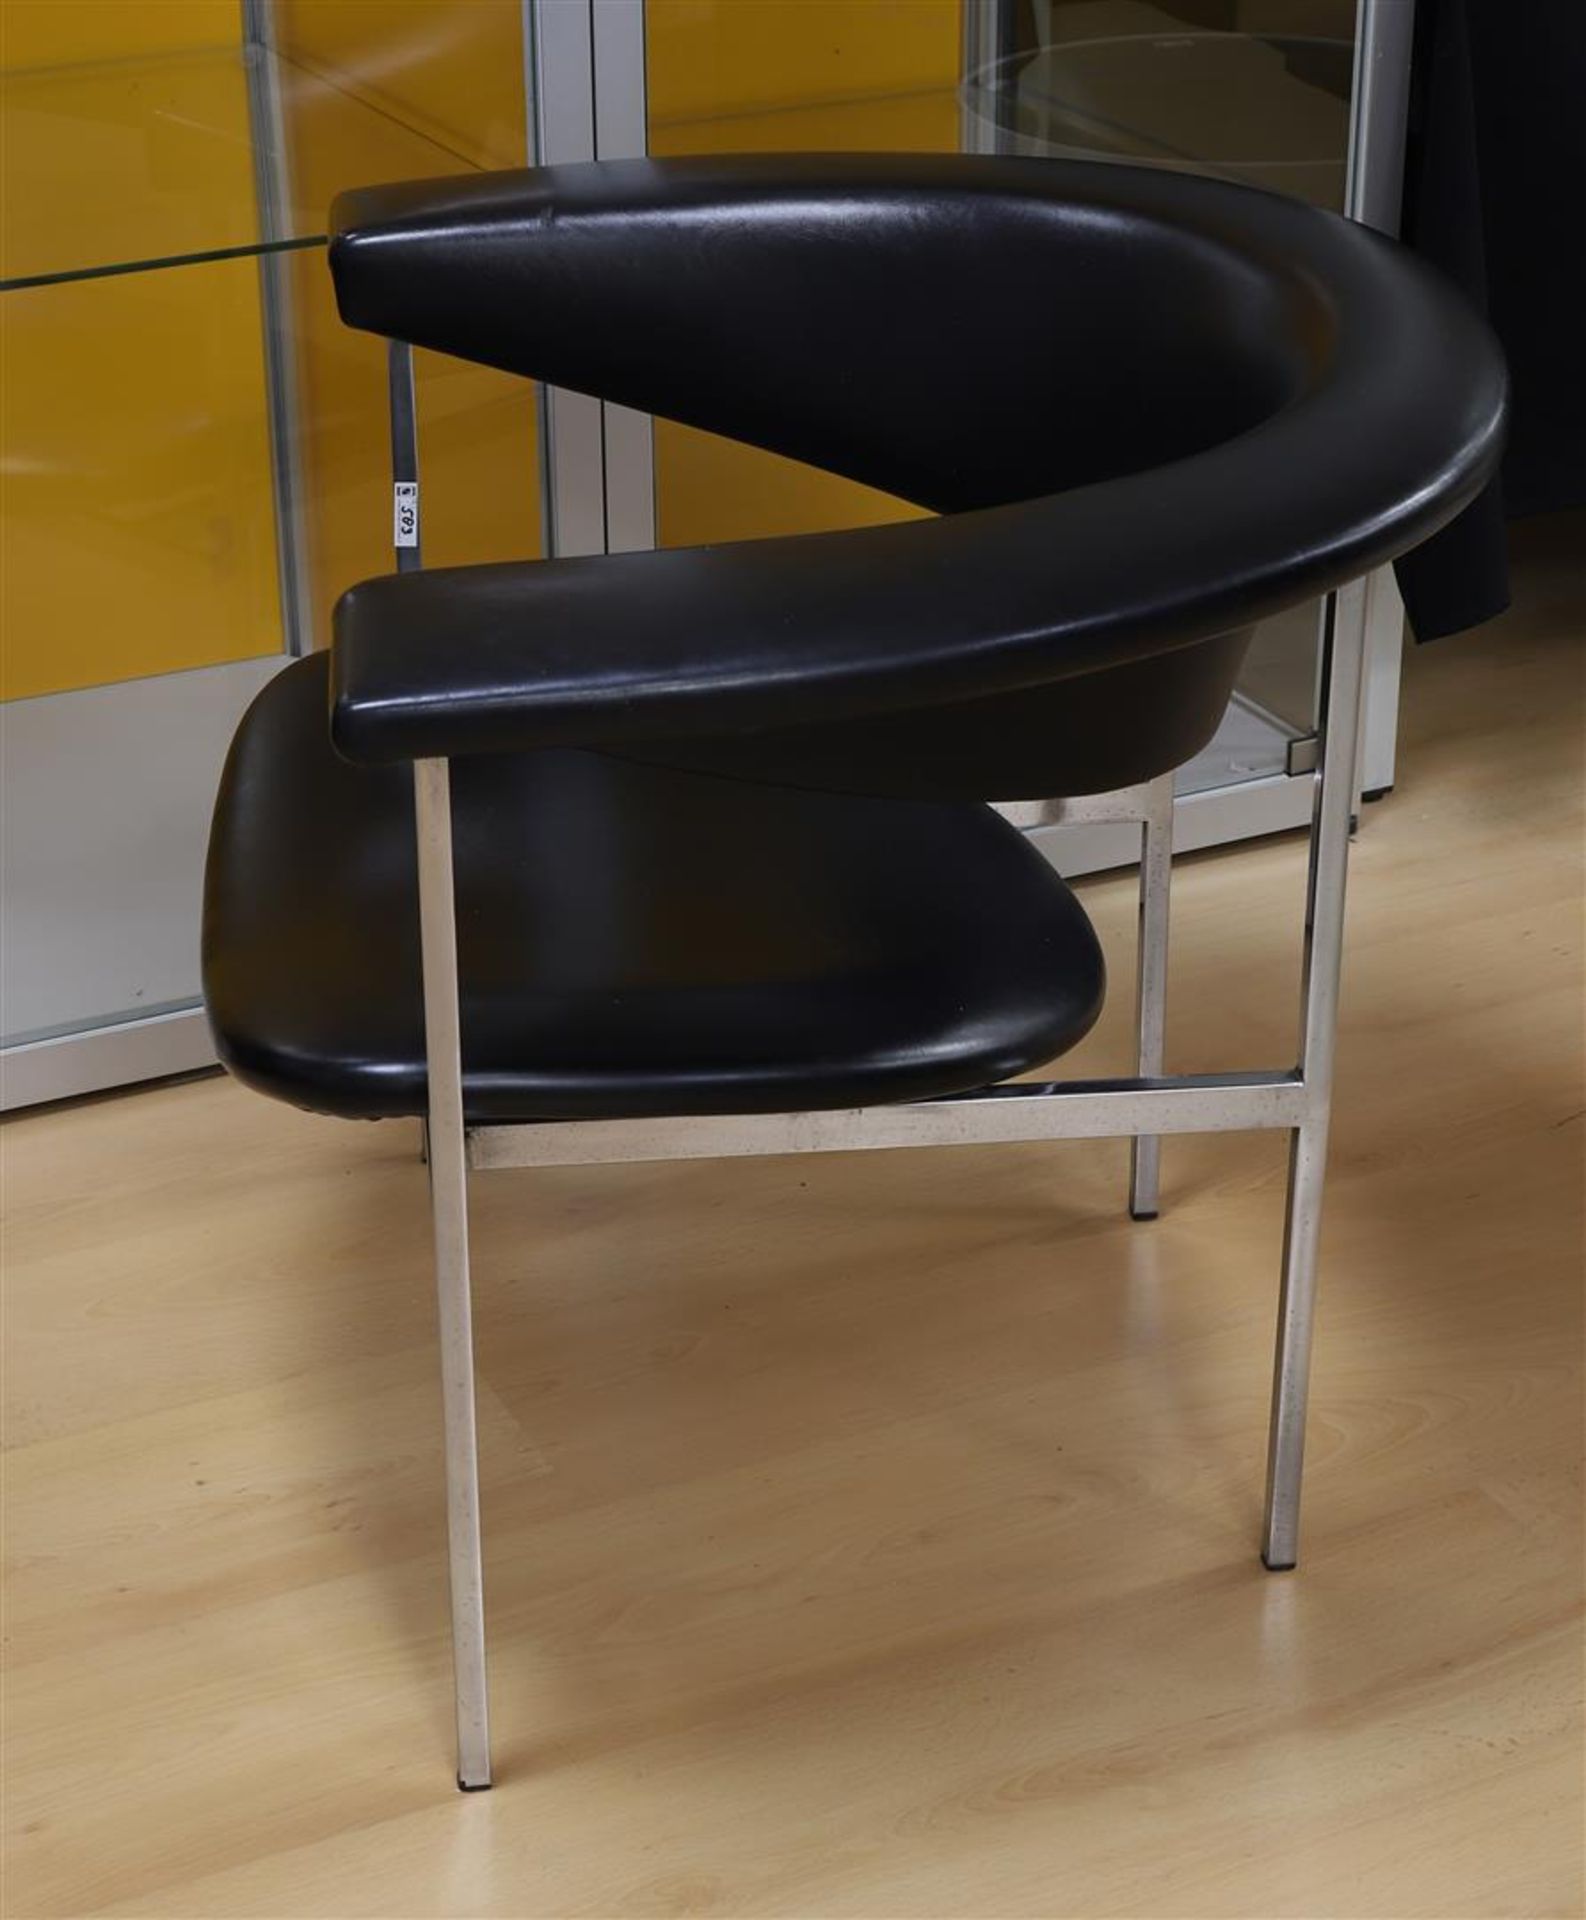 A semi-circular designer armchair 'Meander' with black skai upholstery, design: Rudof Wolf, 1962, - Image 2 of 2